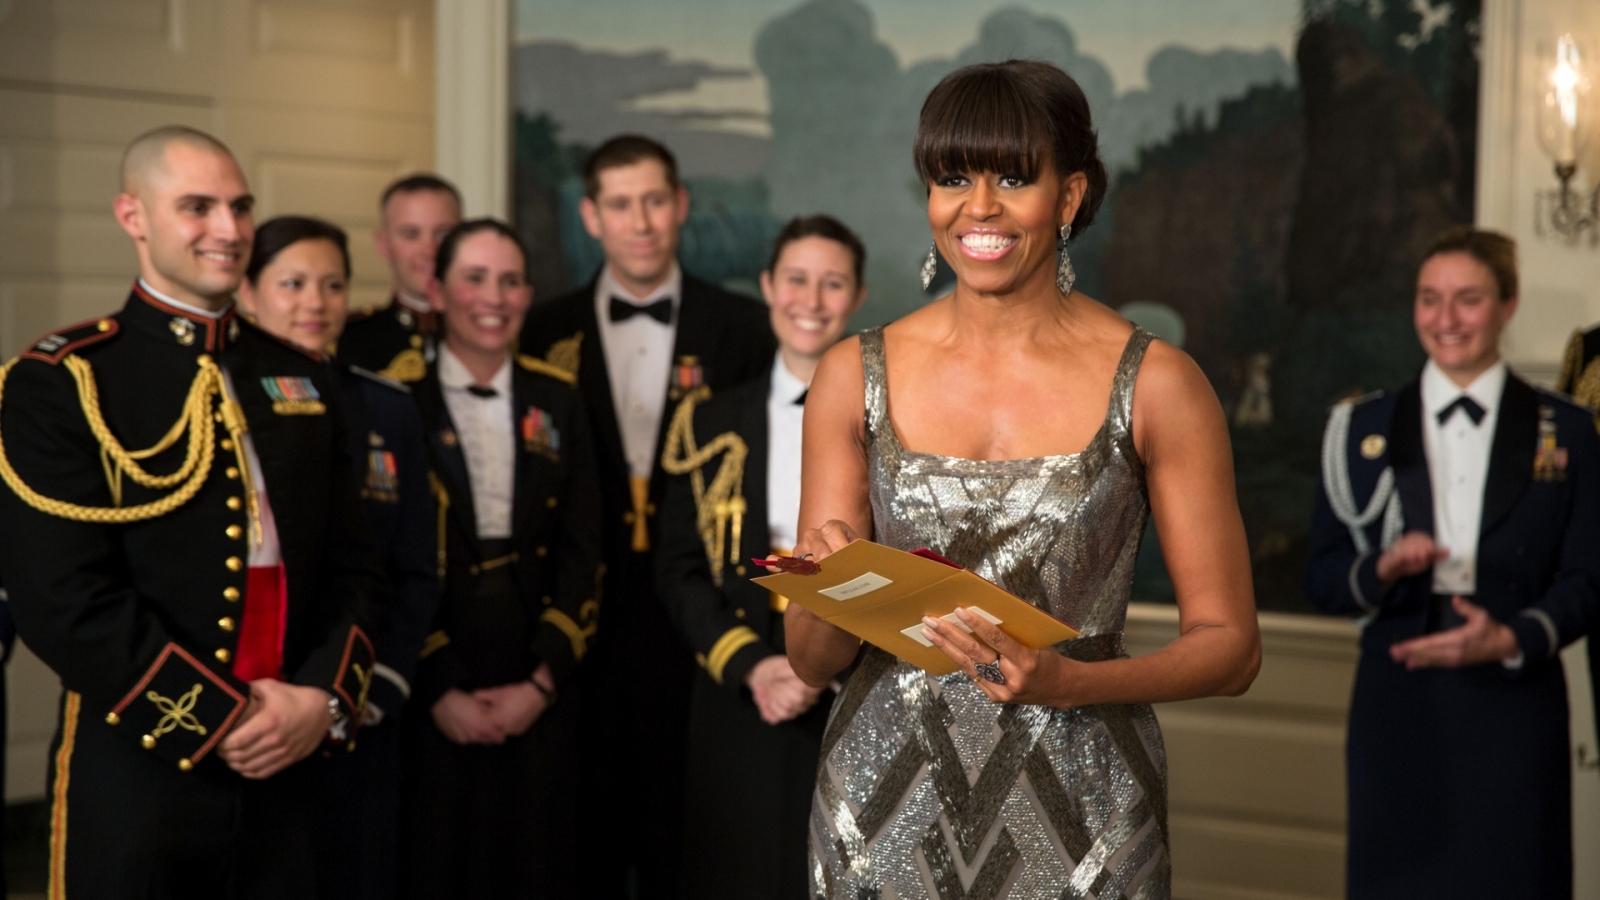 moda | celebridades | estilo das famosas | Oscar 2013 | Michelle Obama | decote de Michelle Obama é censurado pela tv iraniana | Irã censura decote usado por Michelle Obama no Oscar | Vestido usado por Michelle Obama no Oscar é censurado no Irã